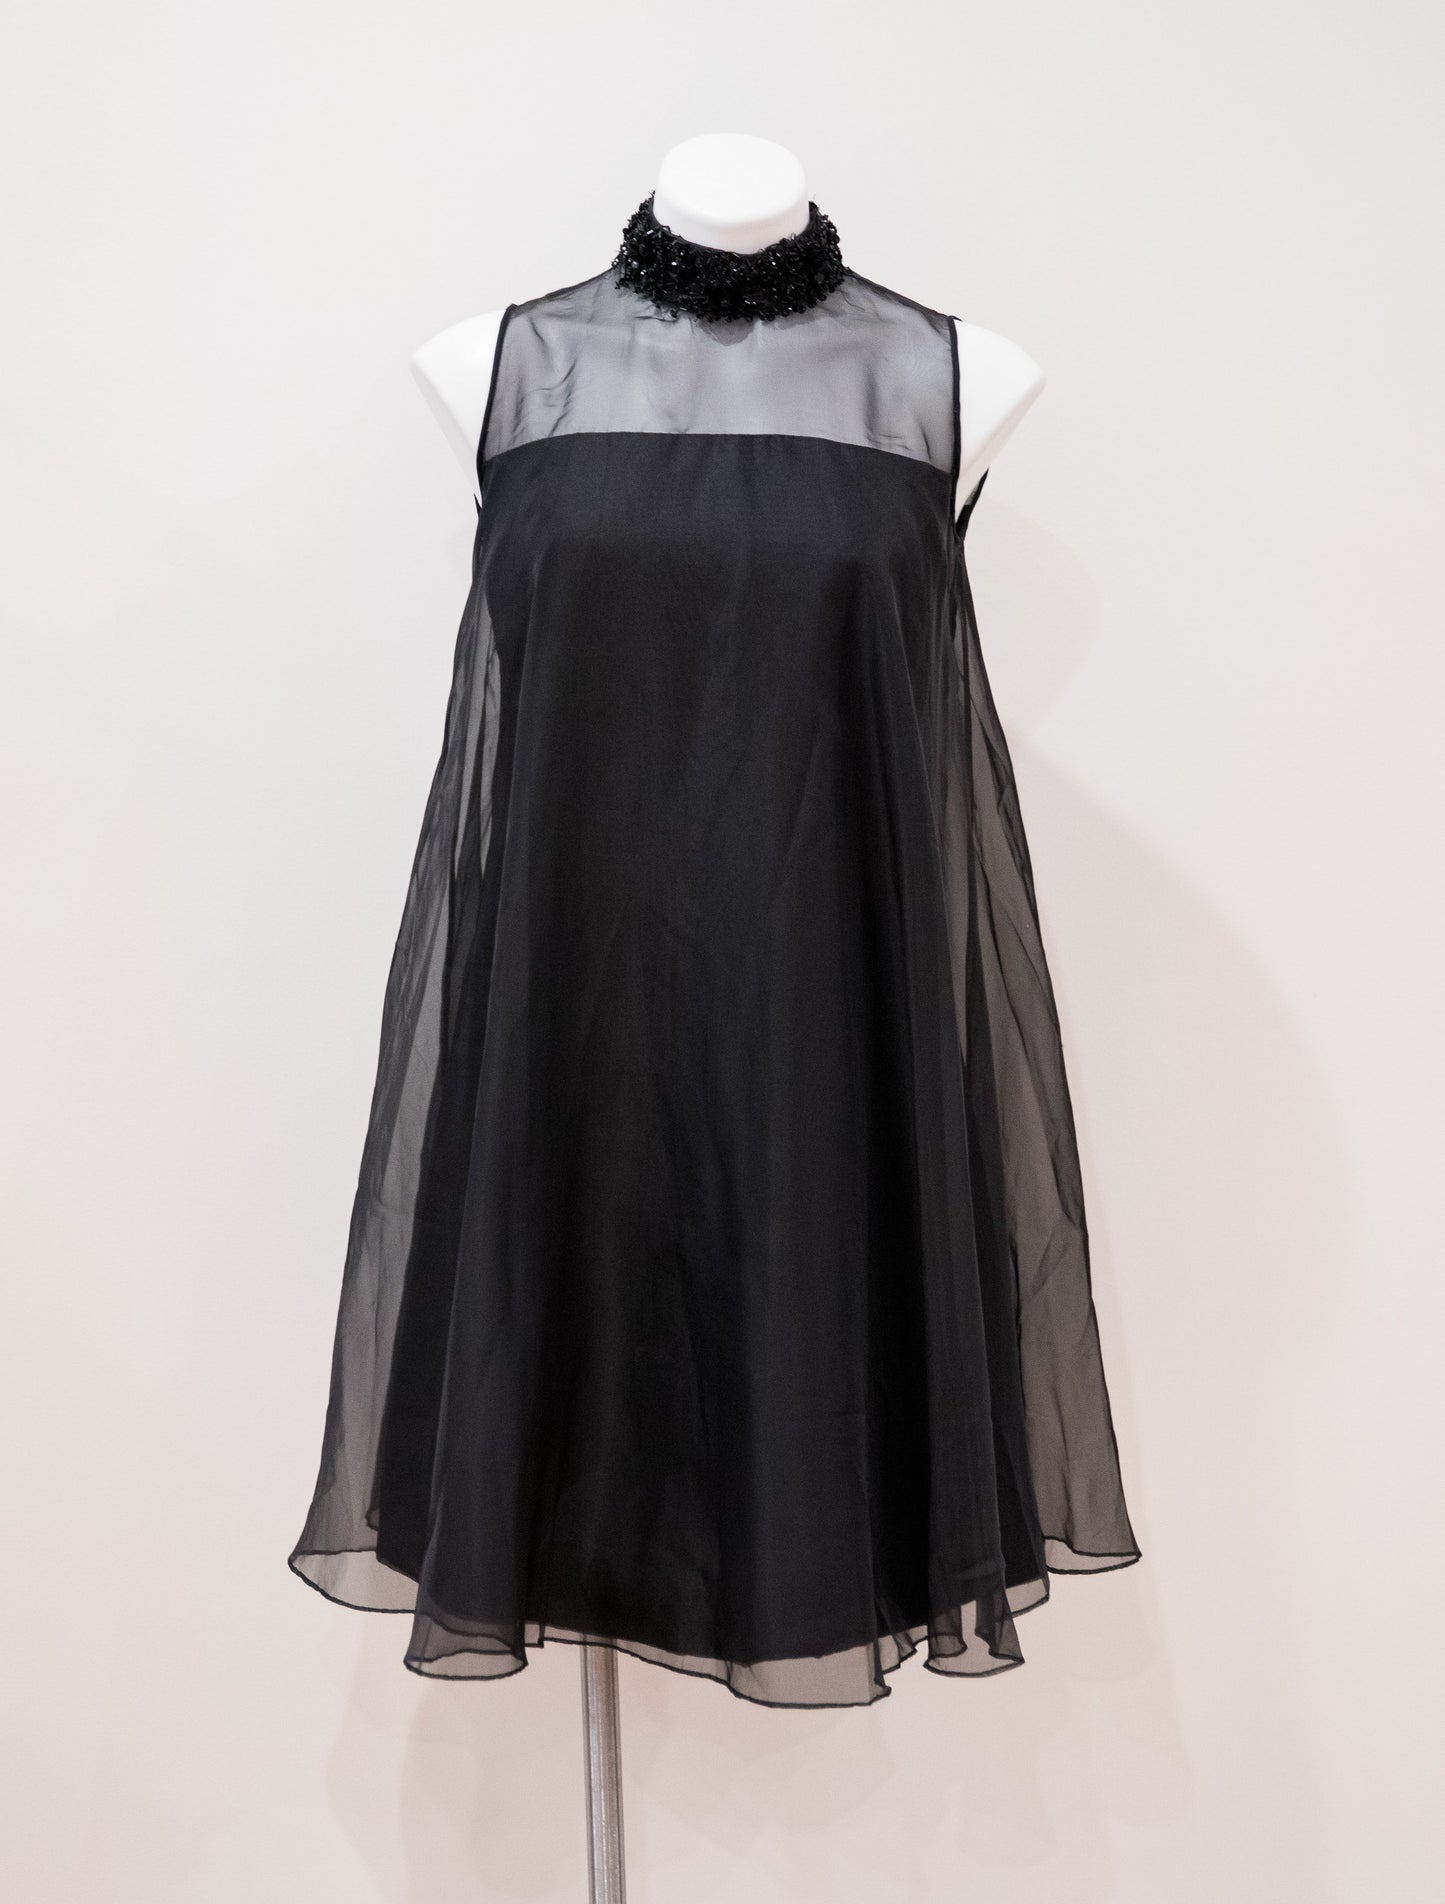 The Chloe Dress, 1960's